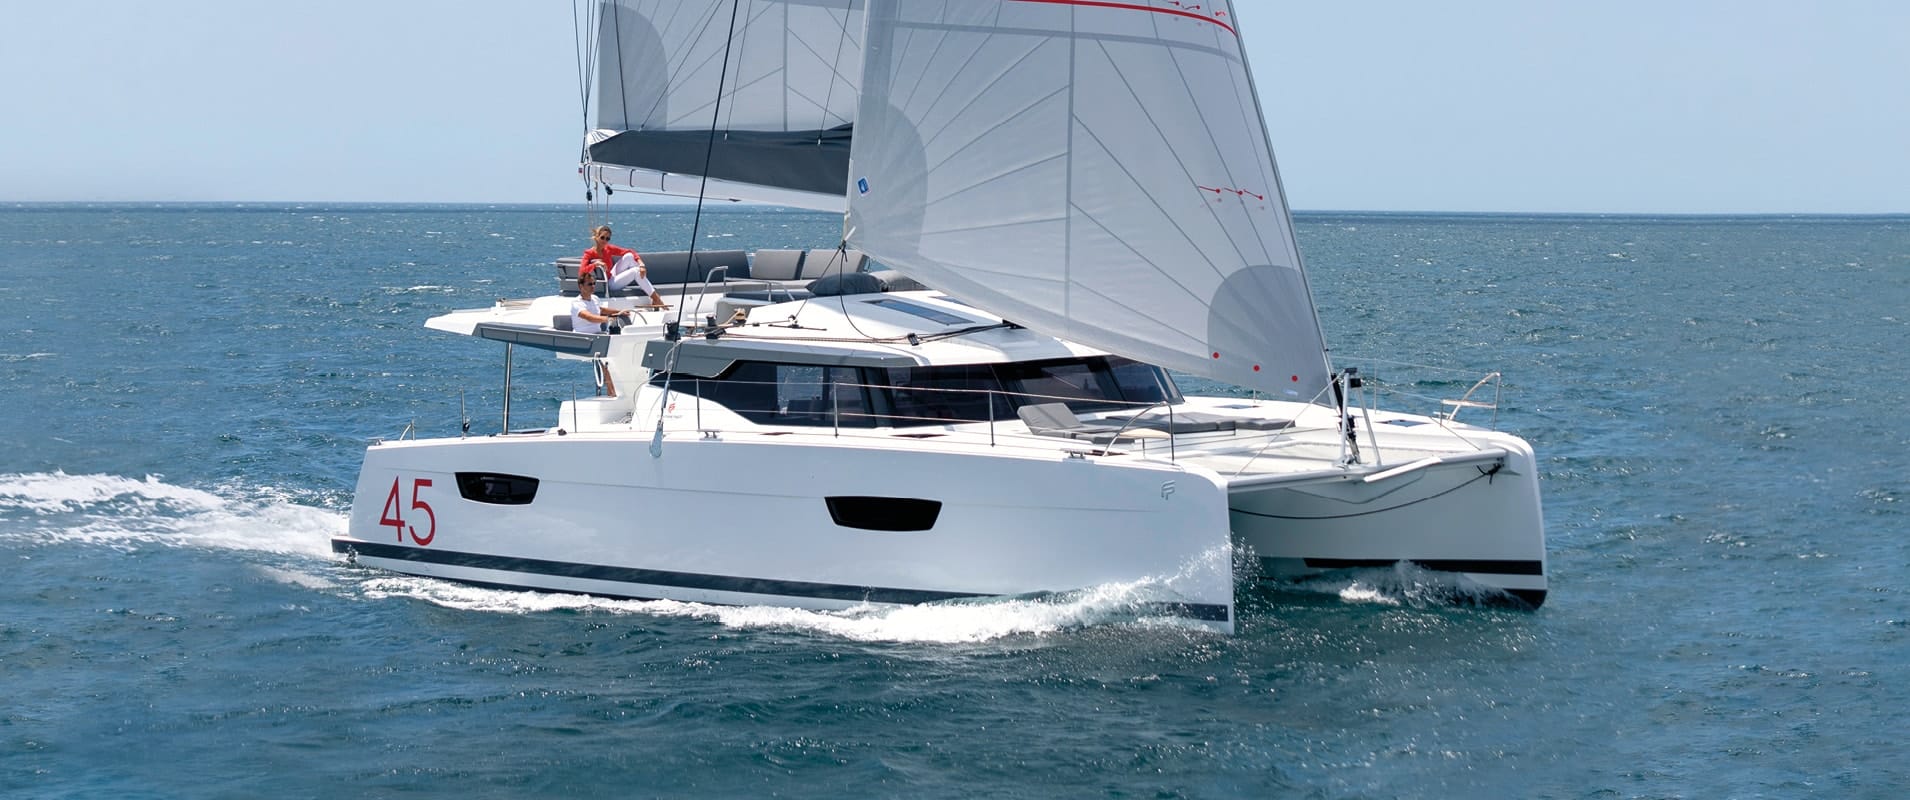 elba-45-cruising-catamarans-fountaine-pajot-sailing-catamarans-1b-min